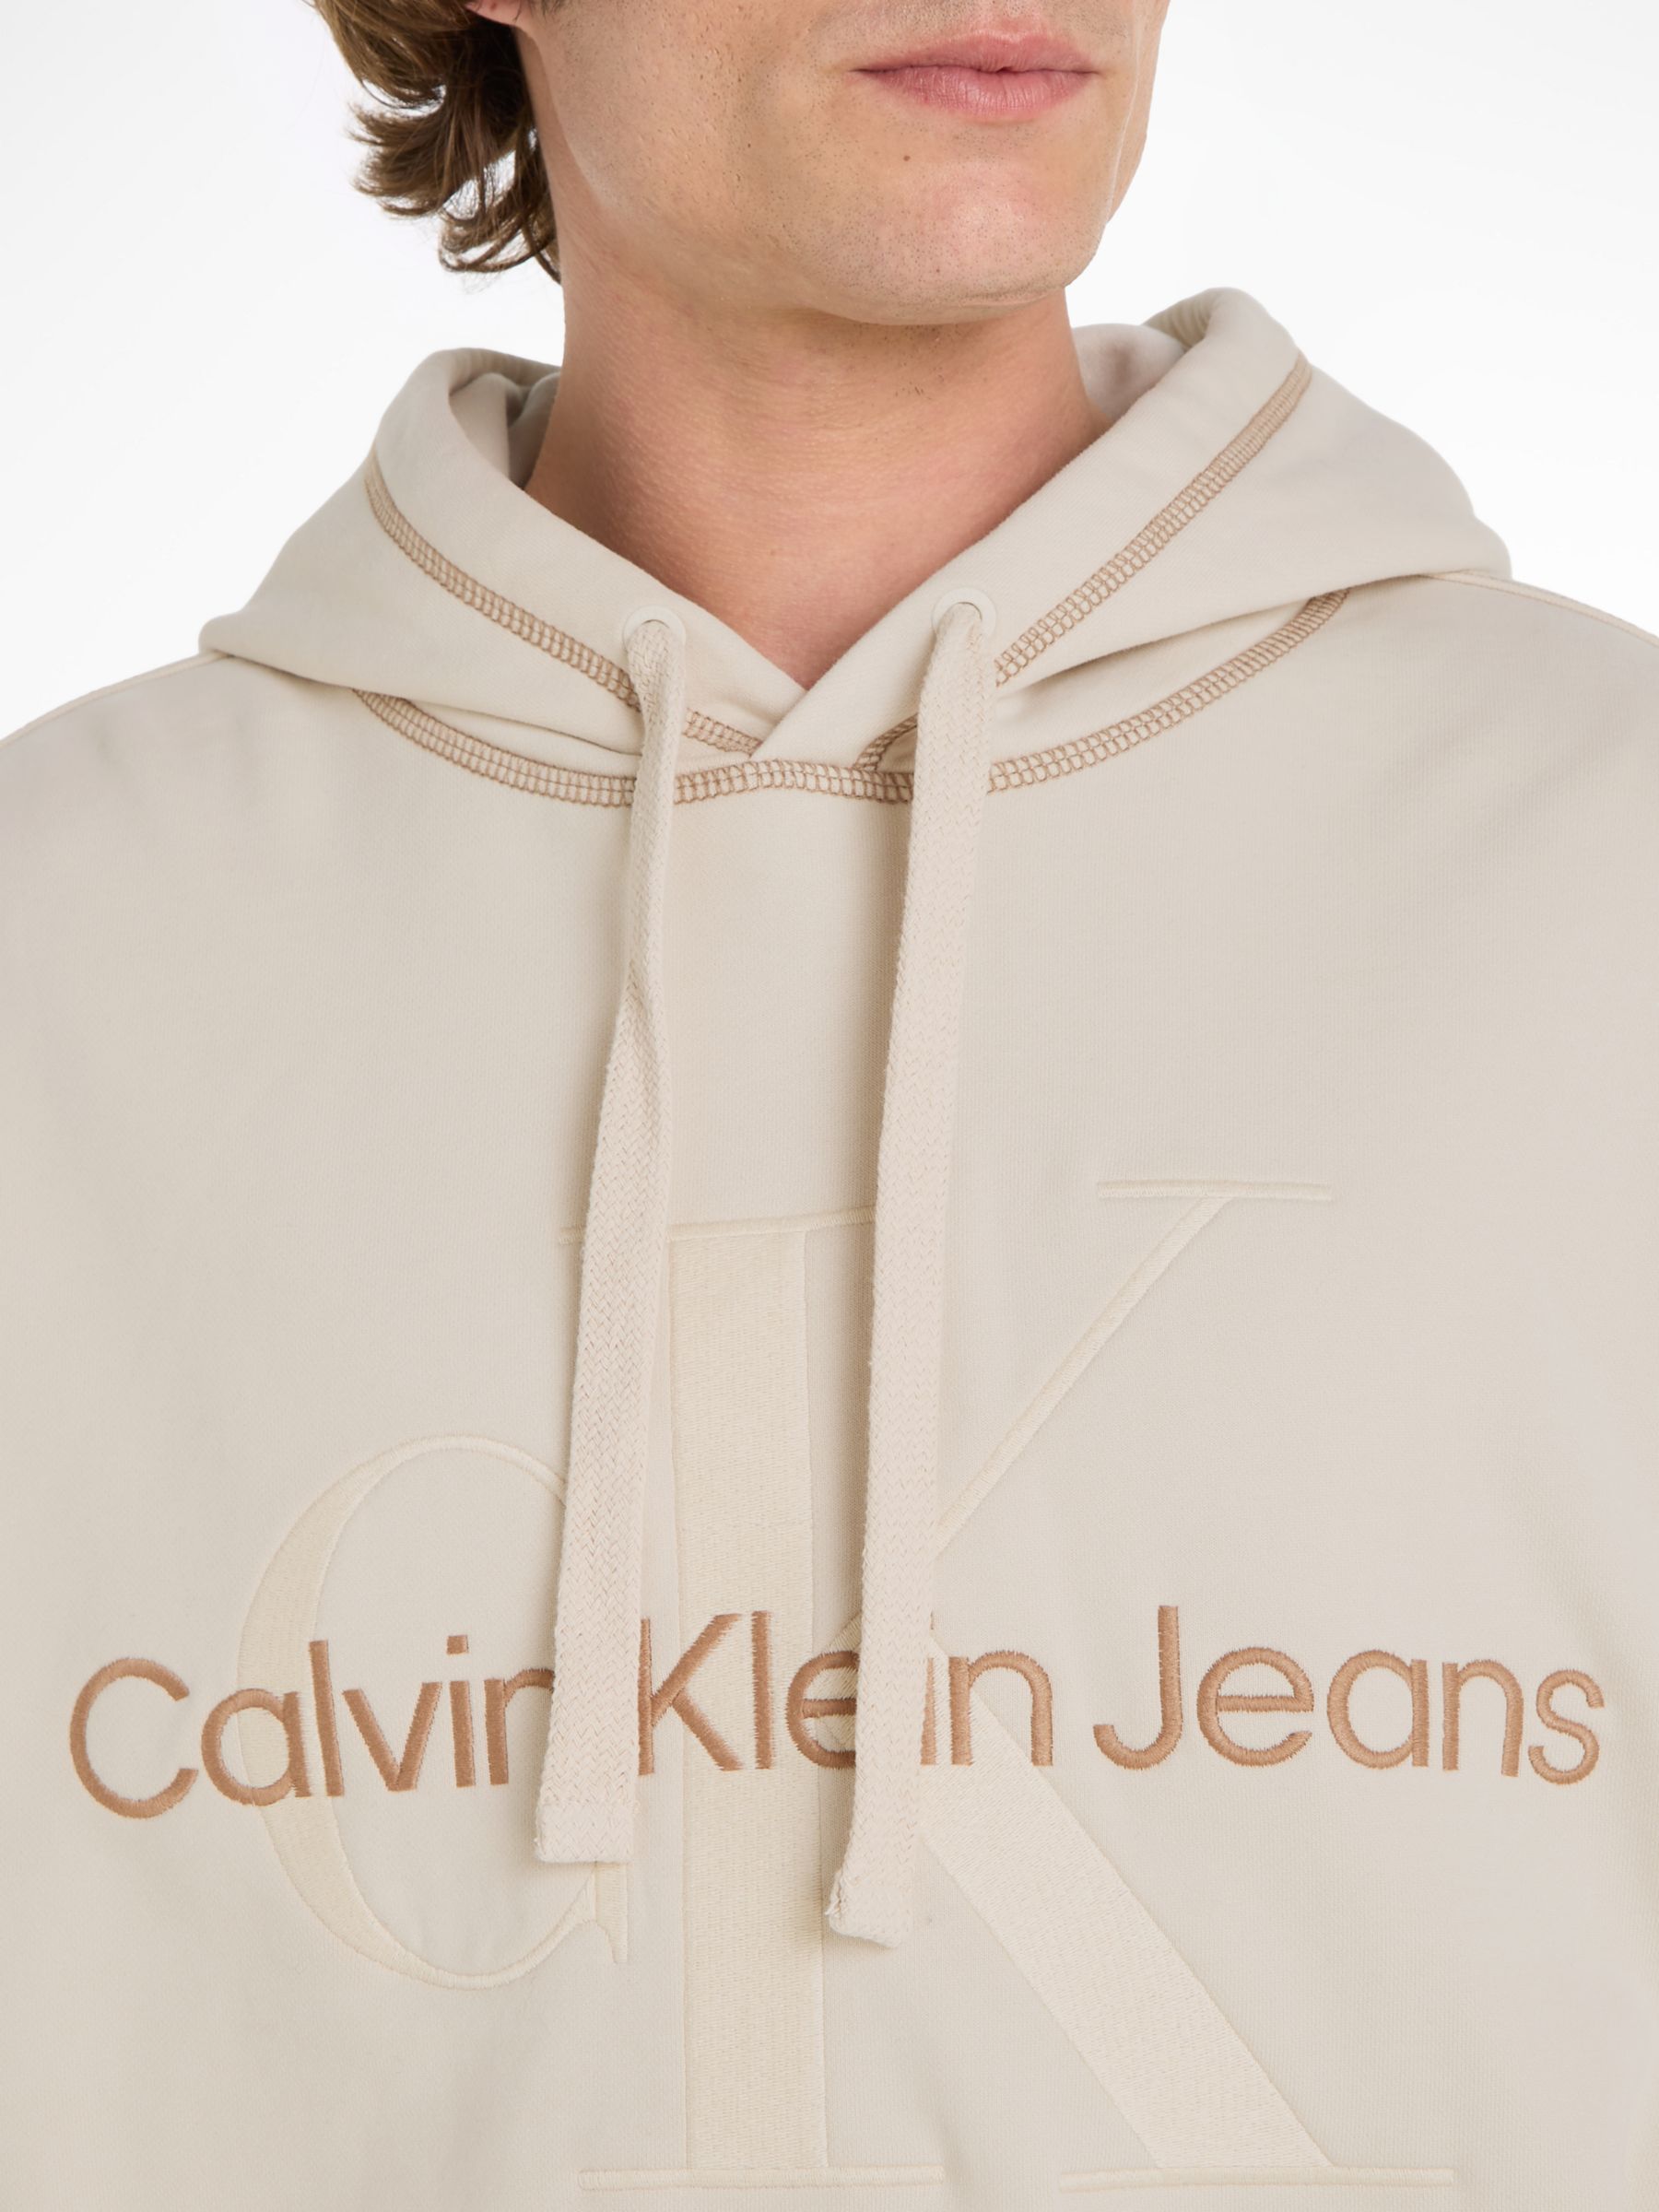 Calvin Klein Jeans Wash Monologo Hoodie, Ivory, L